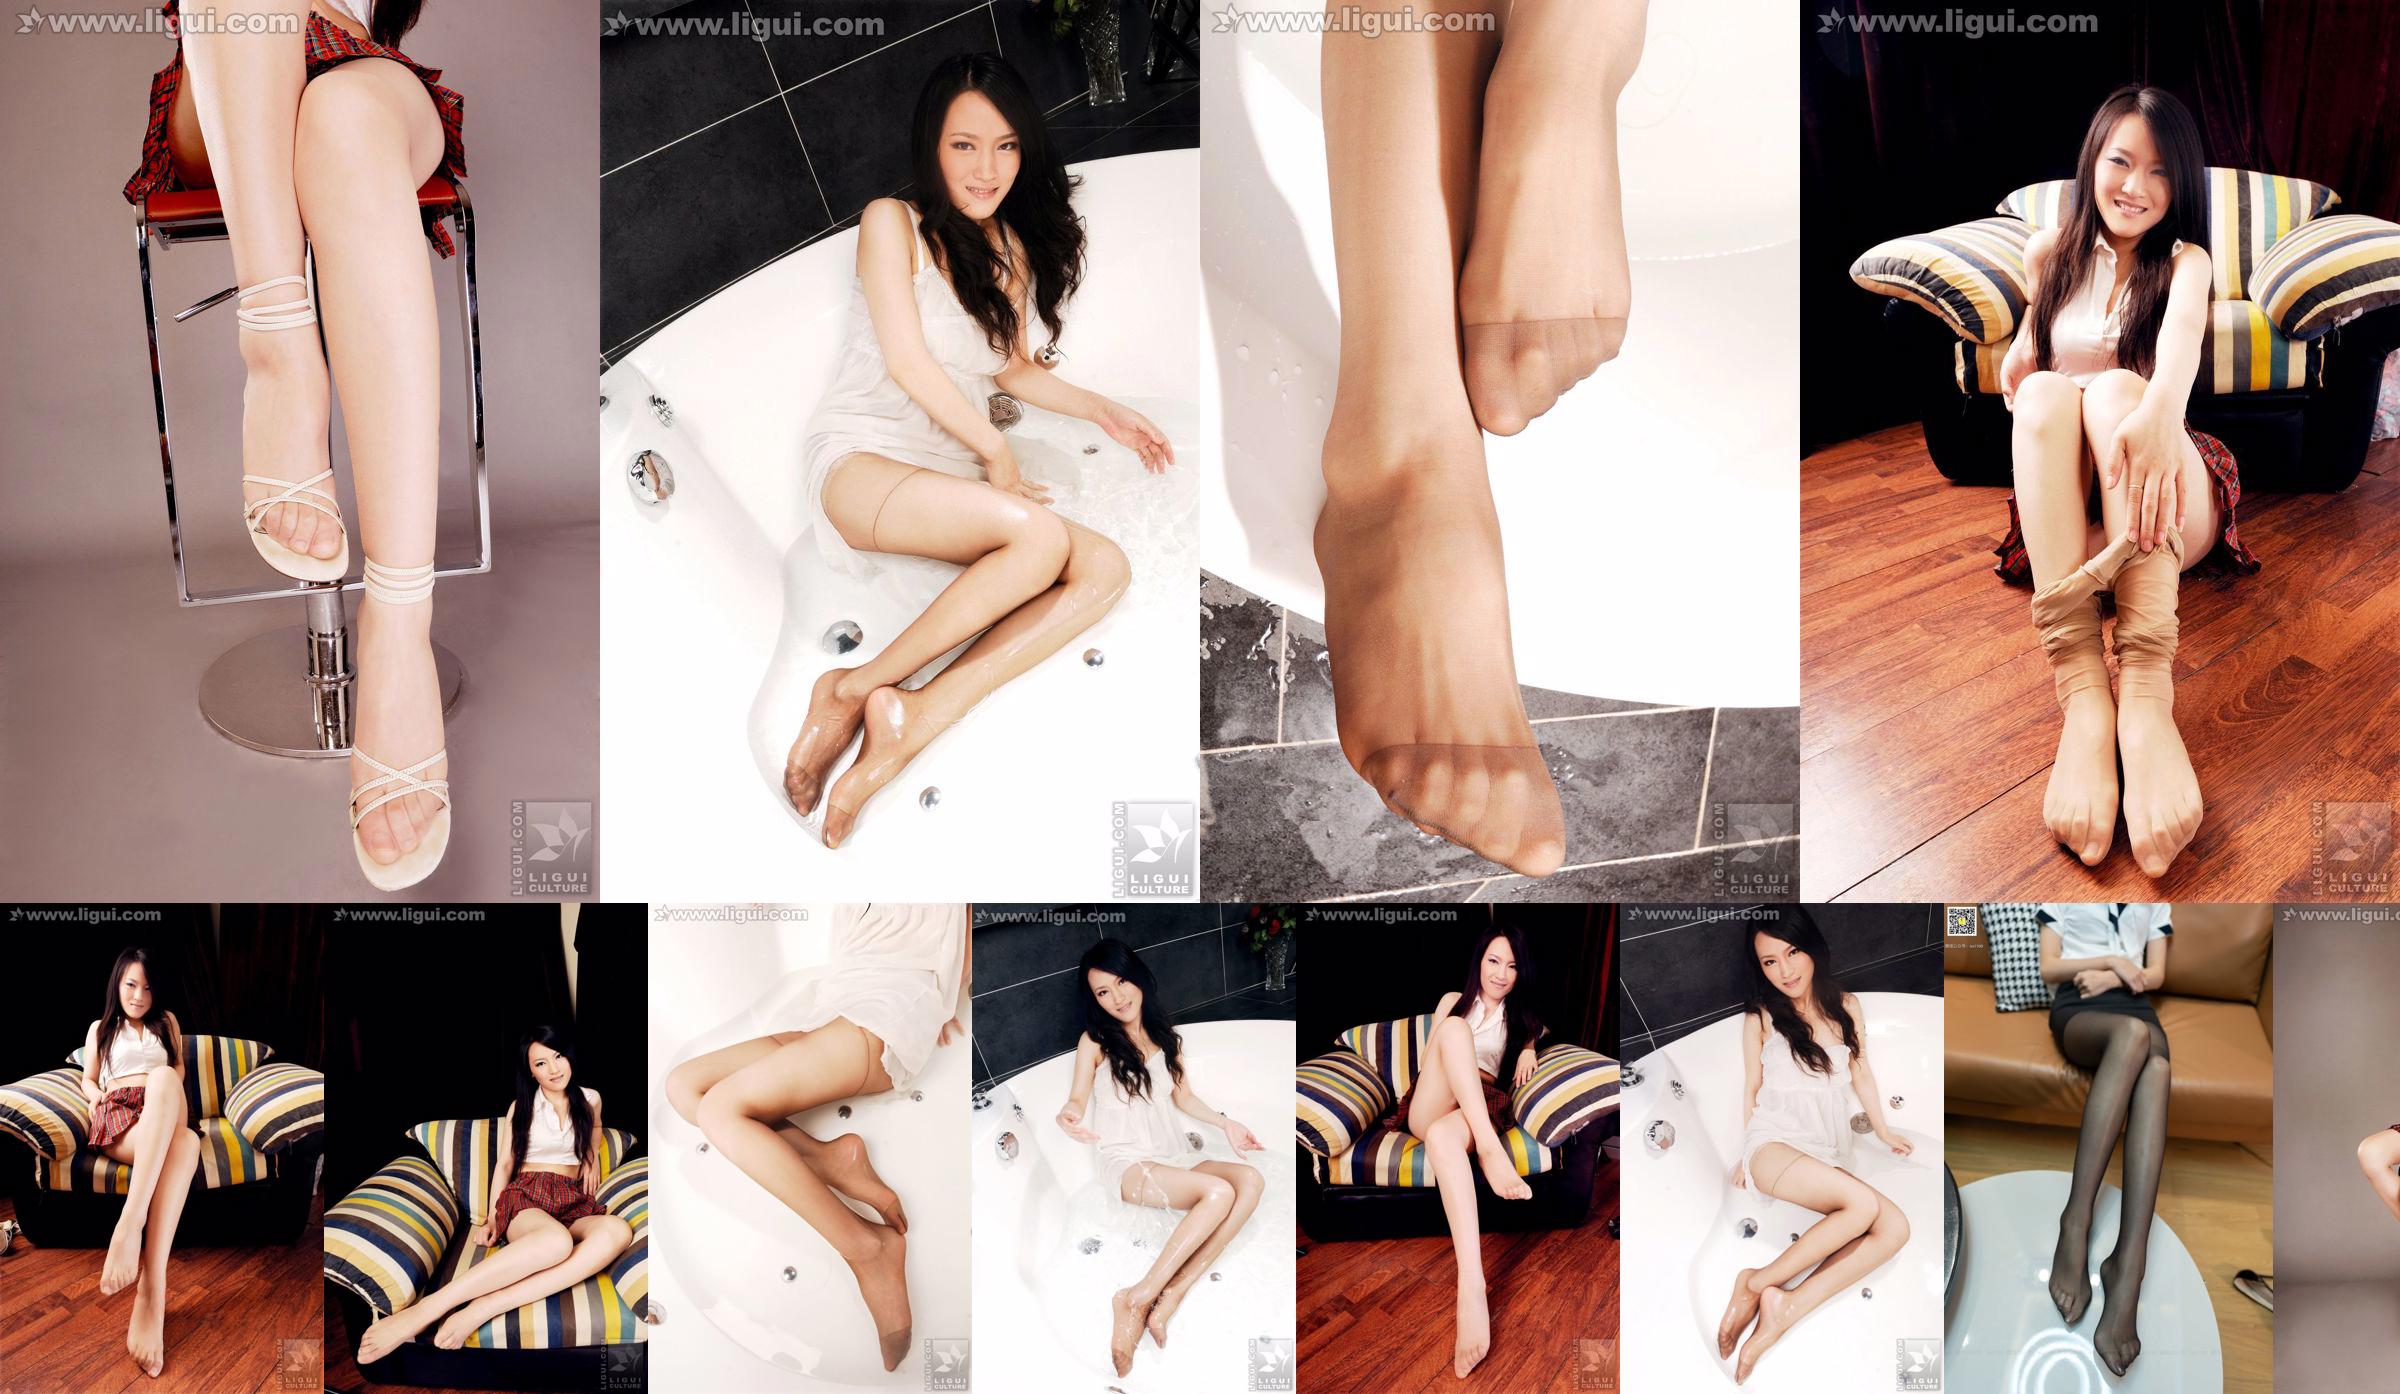 Modelo Wen Ting "Pies puros y hermosos" [丽 柜 LiGui] Imagen fotográfica de pie de seda No.f36e3c Página 8